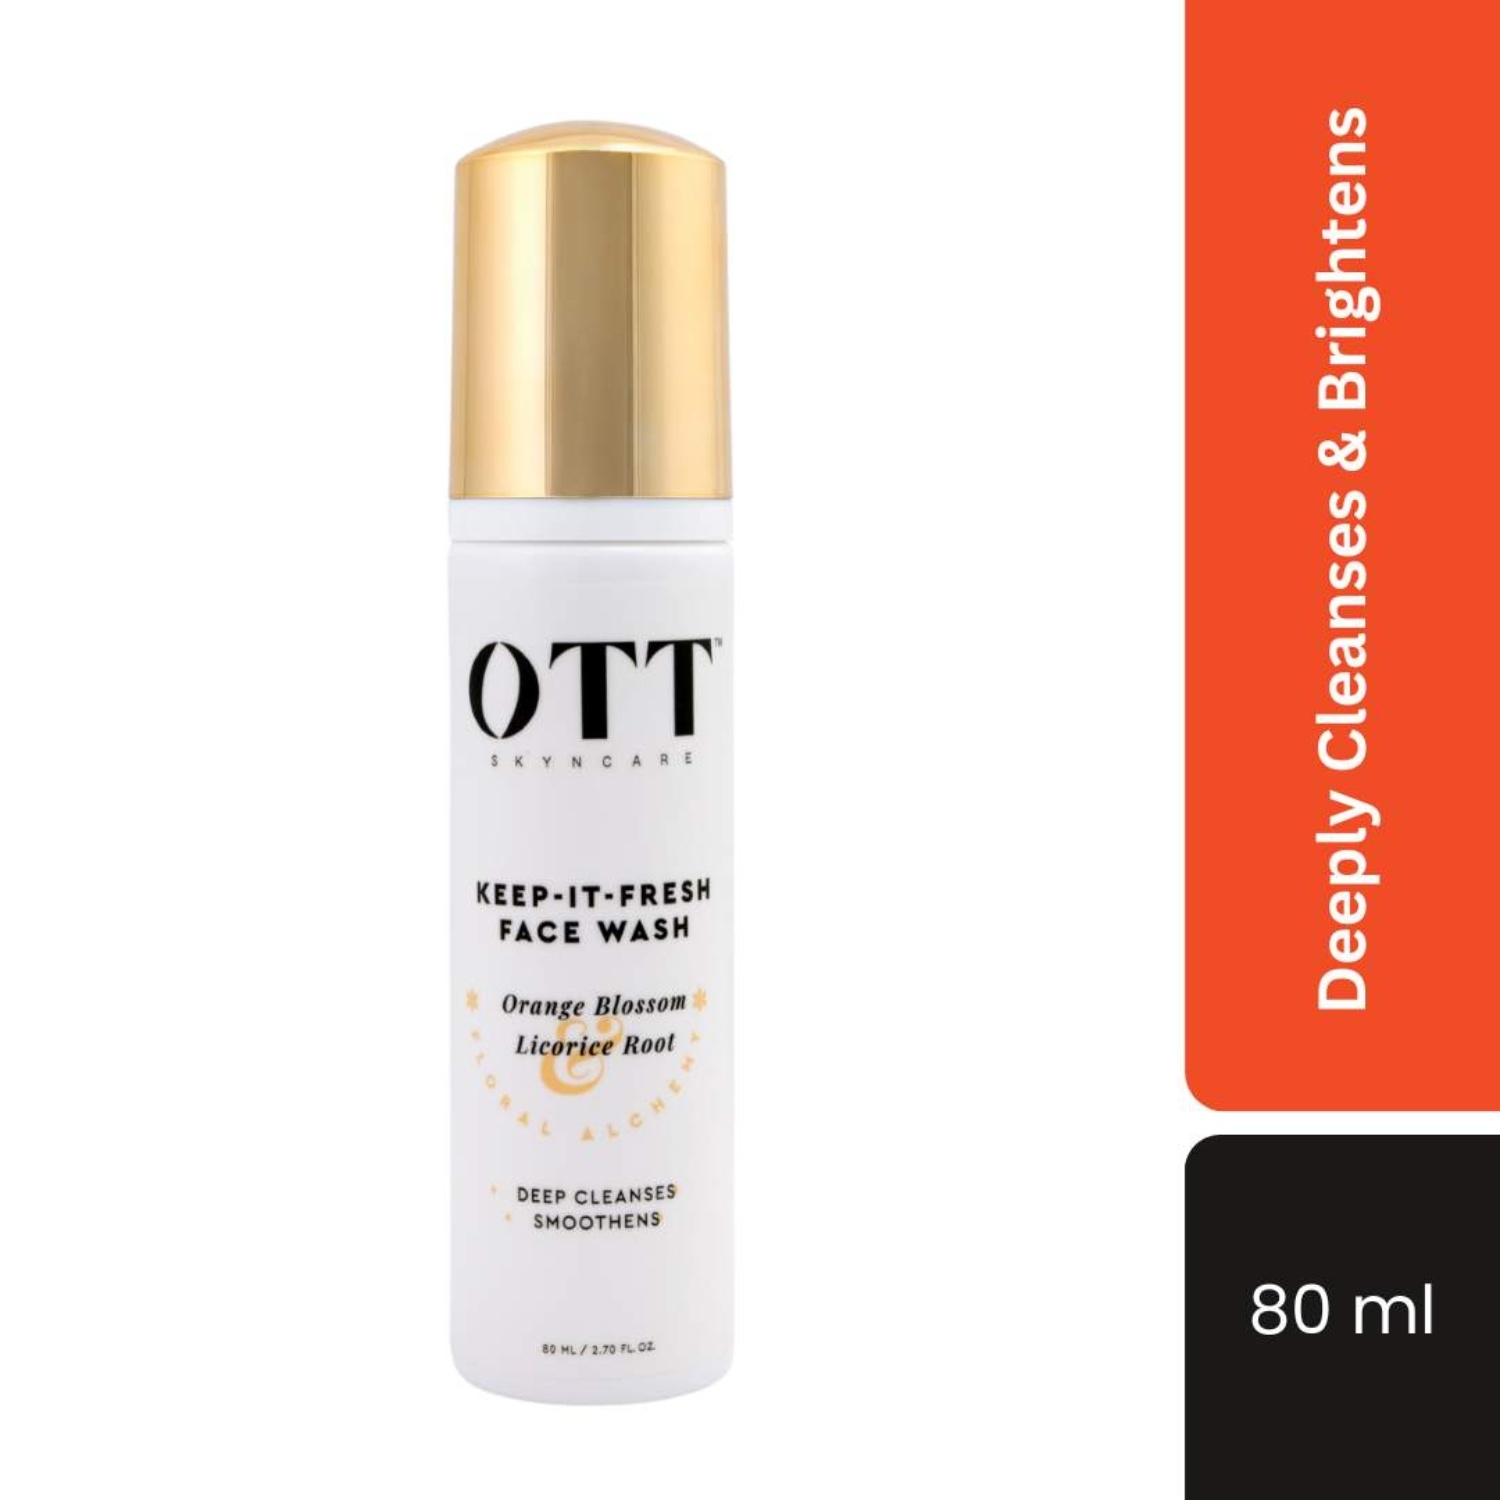 OTT SKYNCARE | OTT SKYNCARE Keep-It-Fresh Face Wash (80ml)